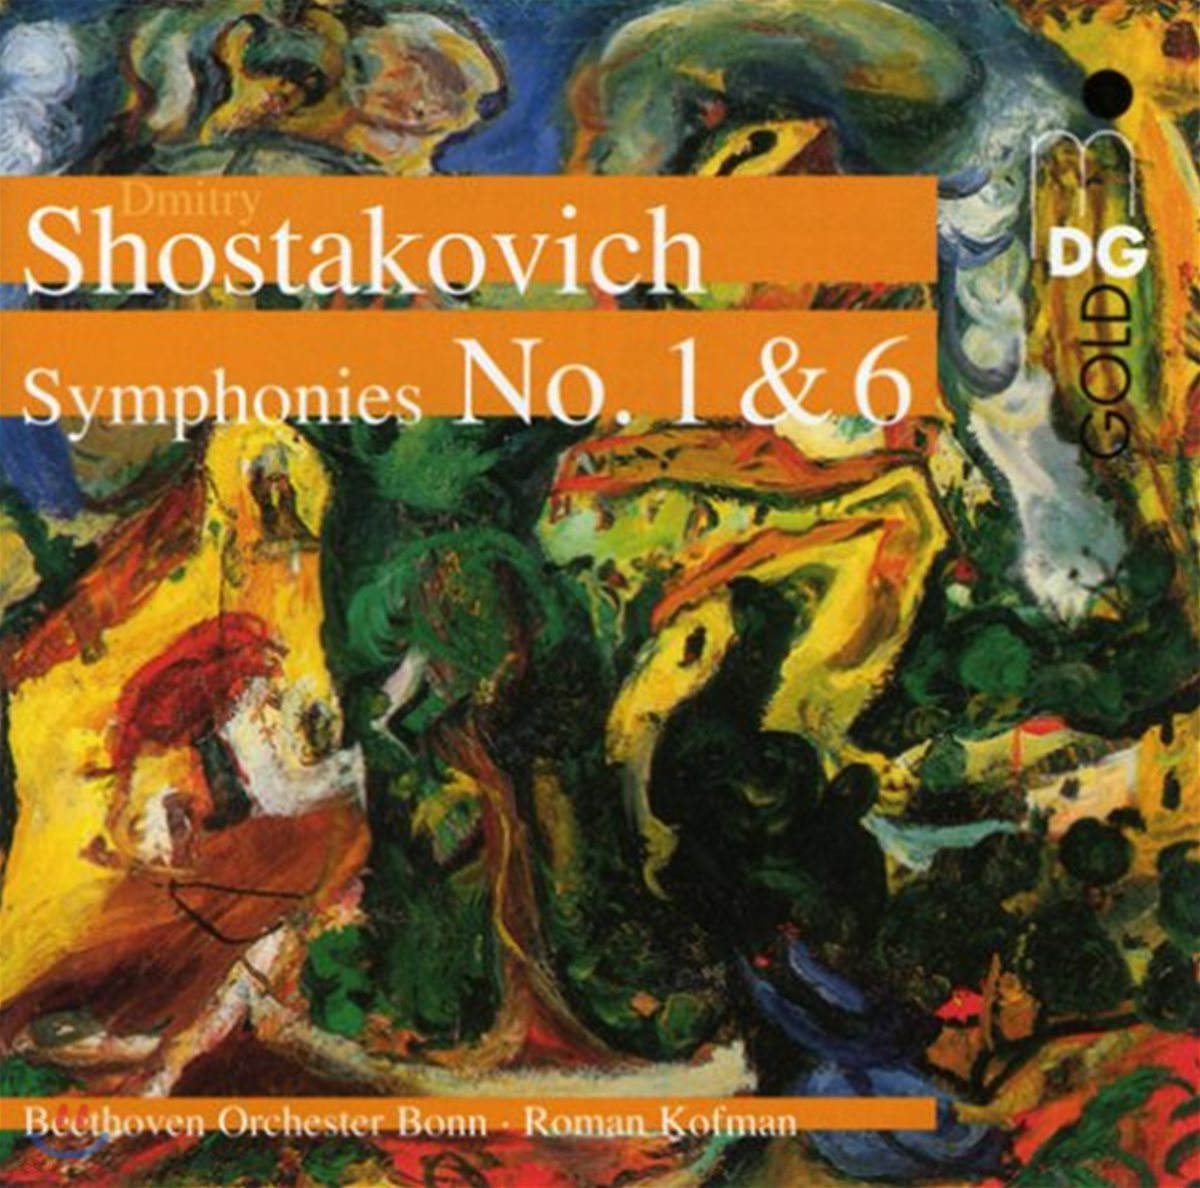 Roman Kofman 쇼스타코비치: 교향곡 1, 6번 (Shostakovich: Symphonies Nos. 1 &amp; 6)